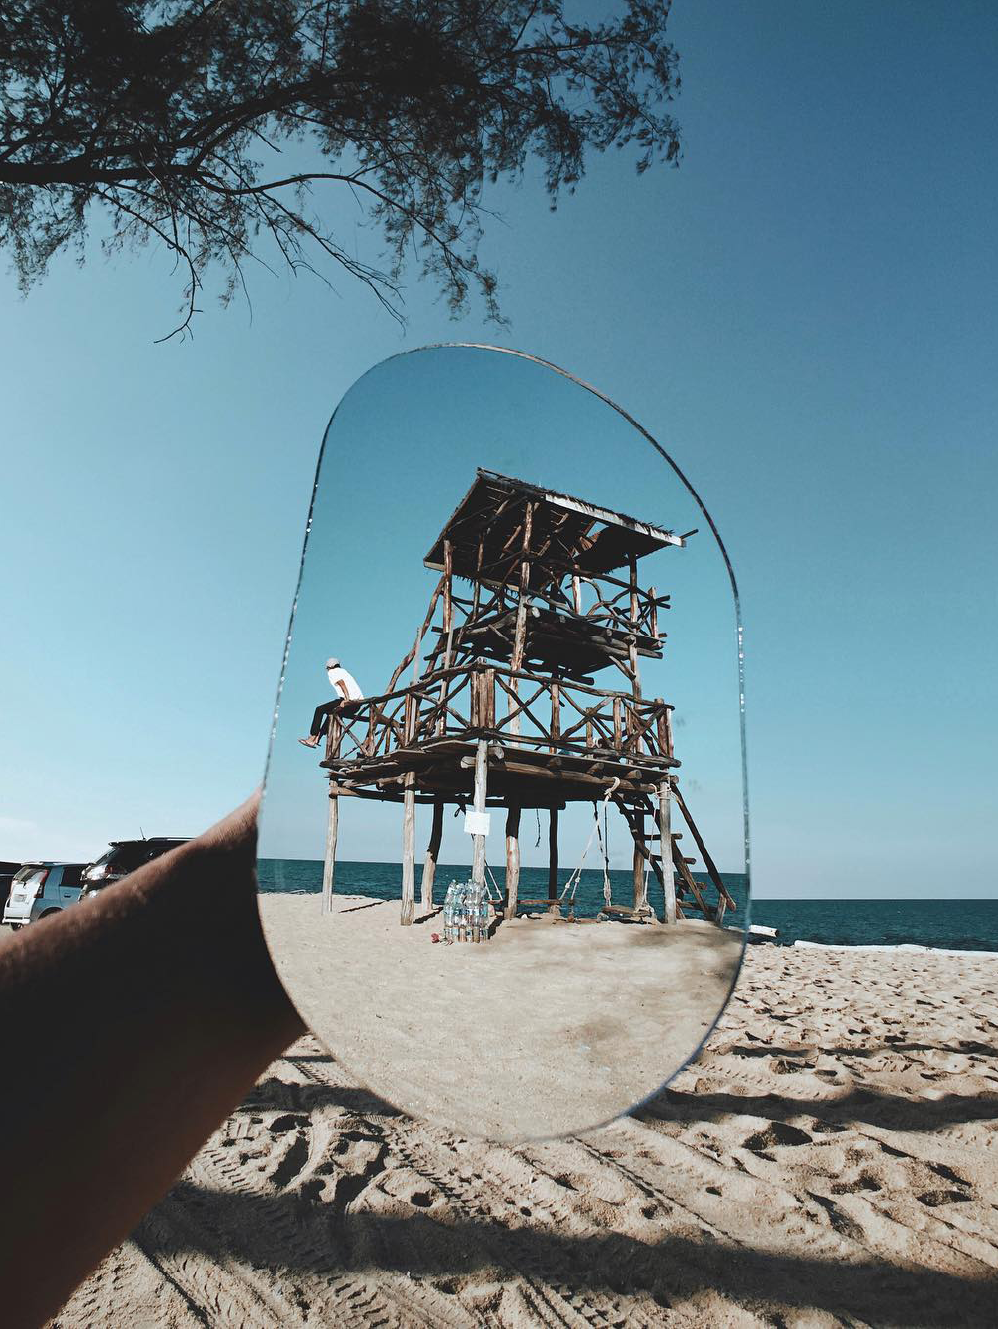 Using SANDMARC's Wide Lens a shot of the beach through a mirror reflection